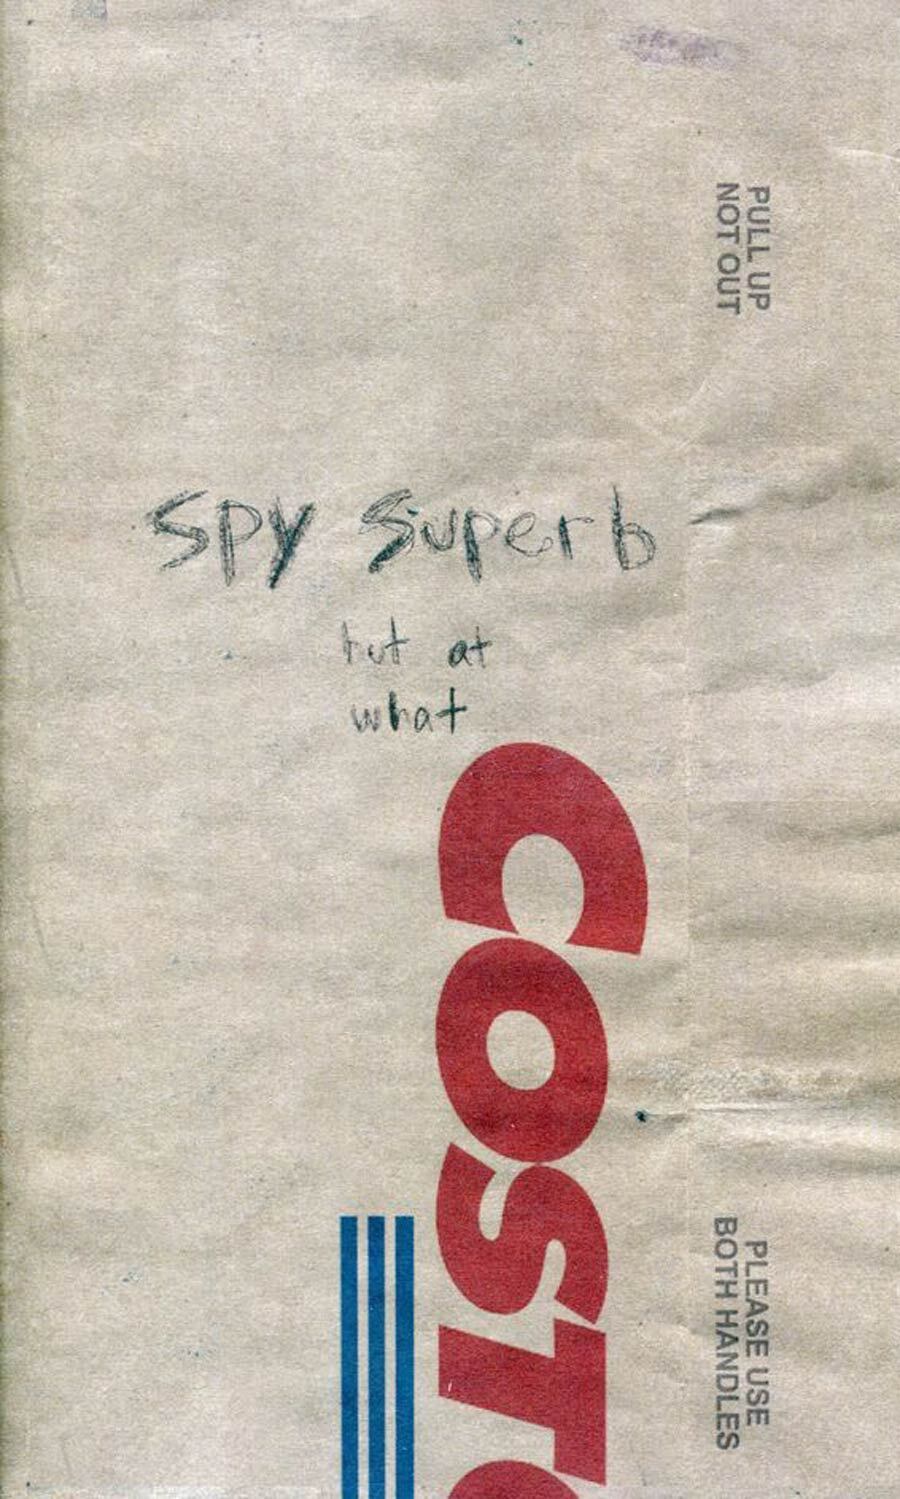 Spy Superb #3 (Of 3) Cover A Kindt